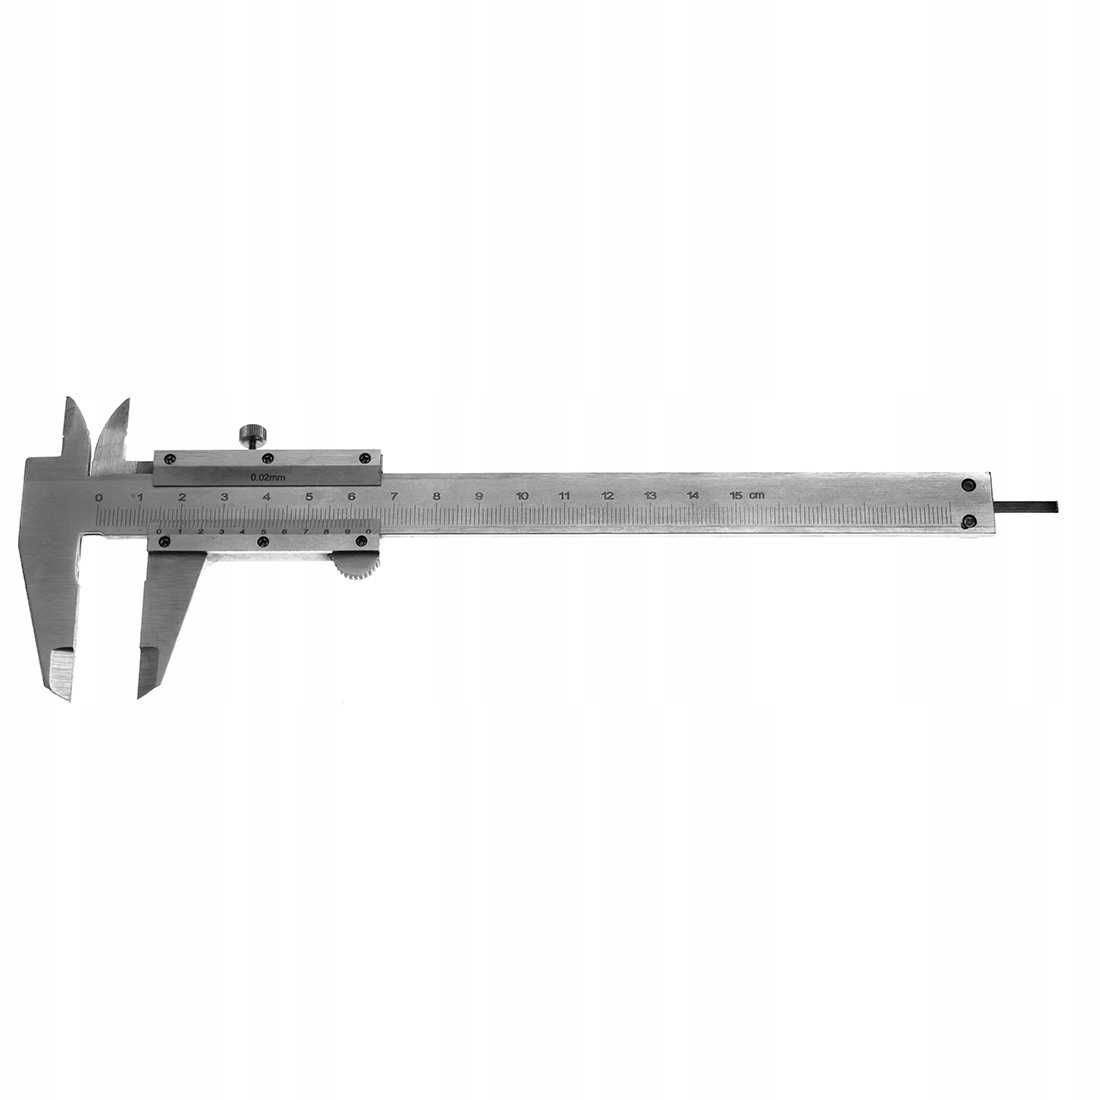 Subler 0-150mm complet metalic (TA1311)